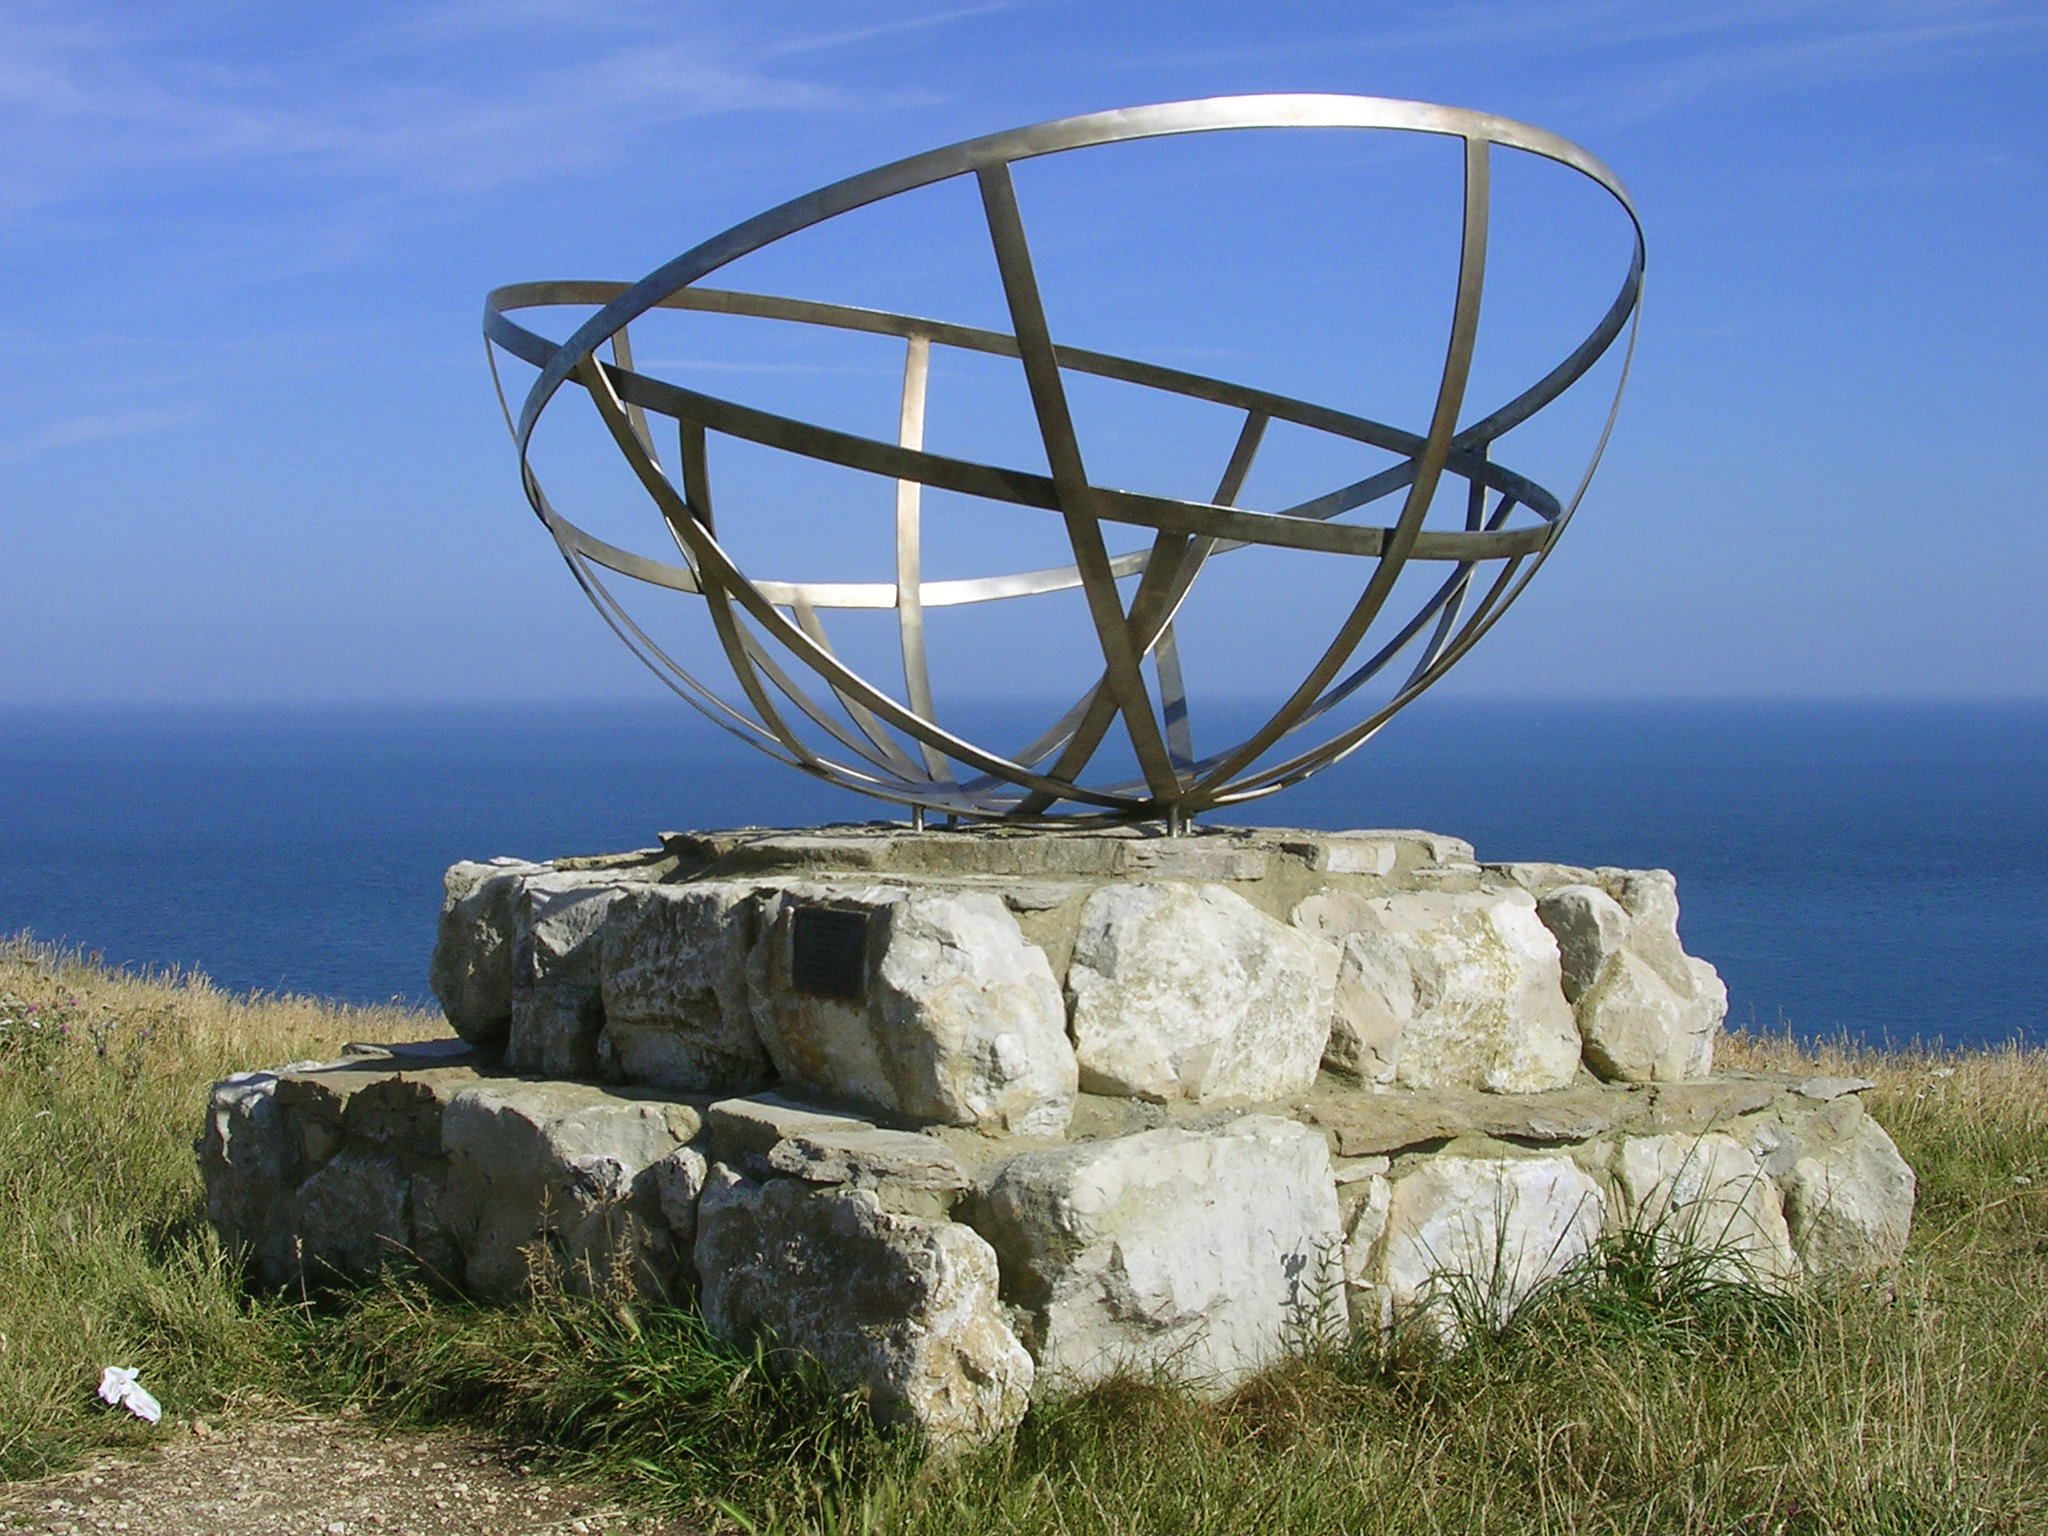 File:St albans head radar memorial.jpg - Wikipedia